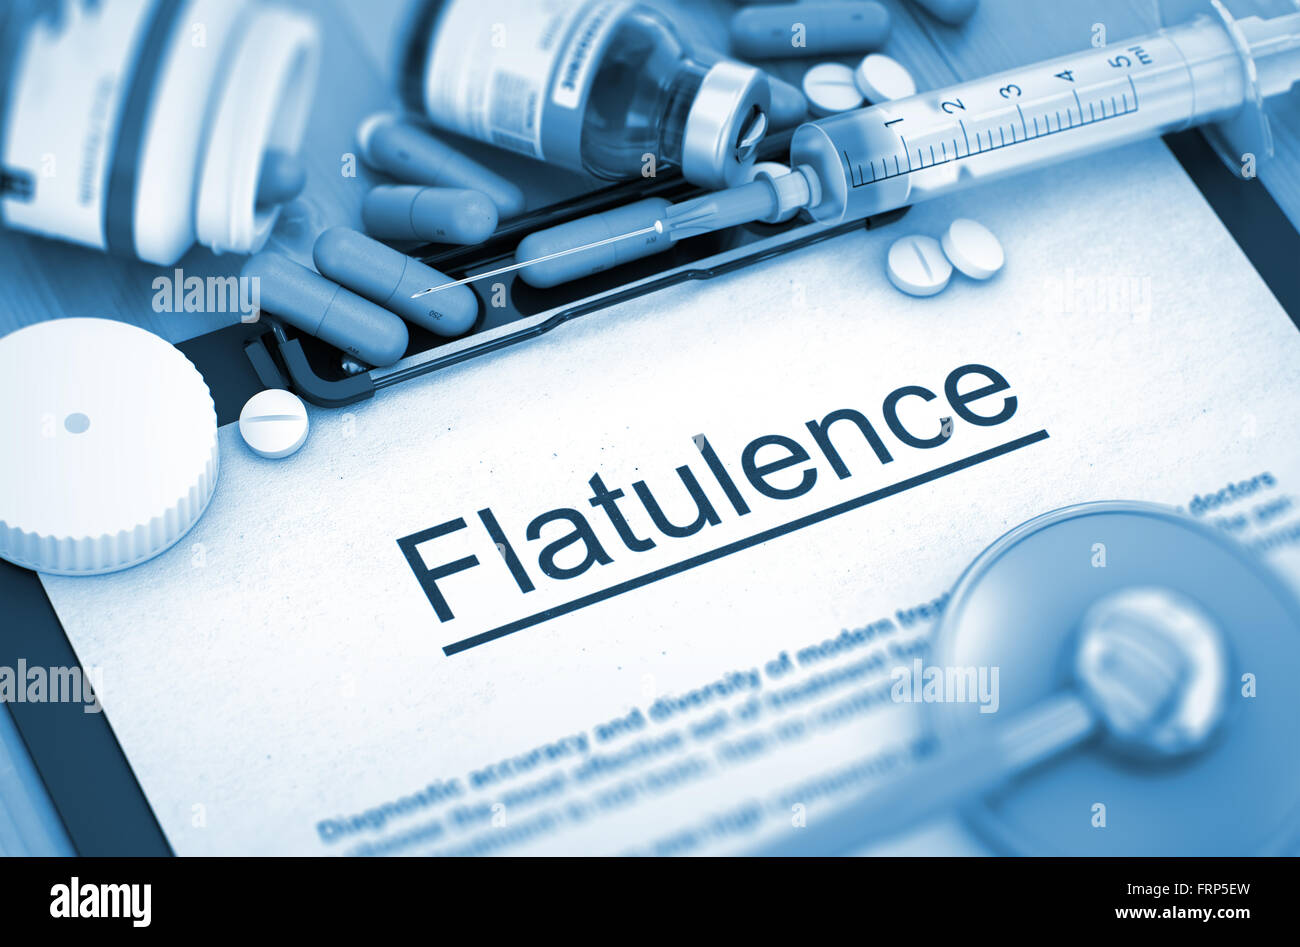 Flatulence Diagnosis. Medical Concept. Stock Photo